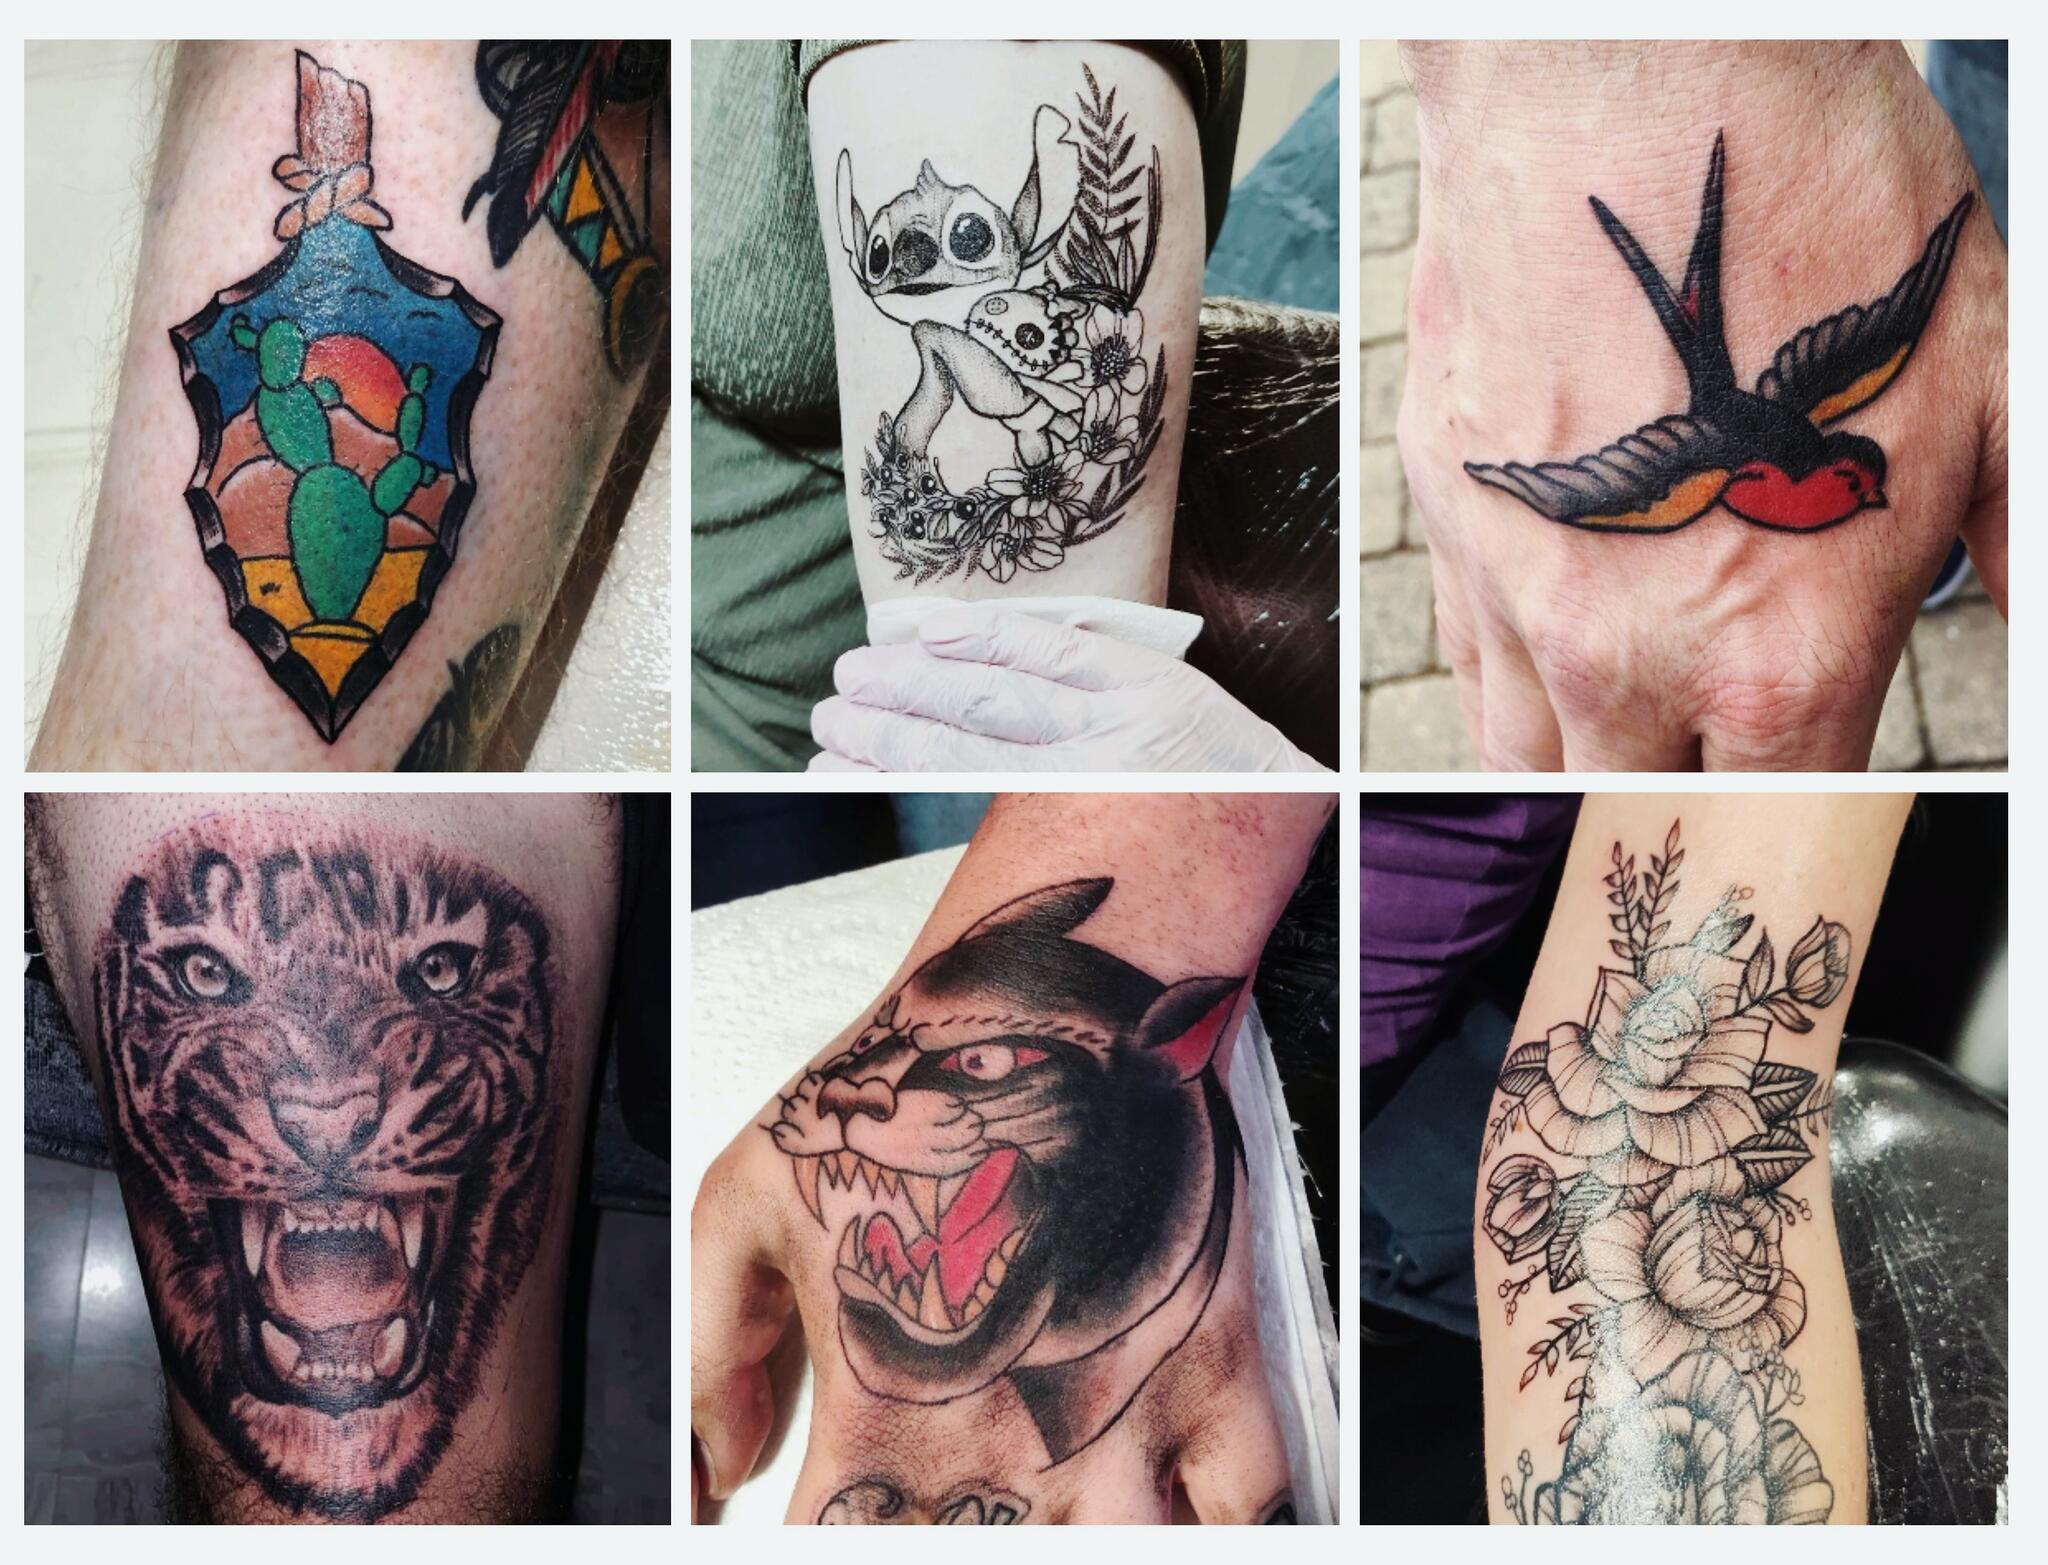 SEVEN SEAS Tattoos